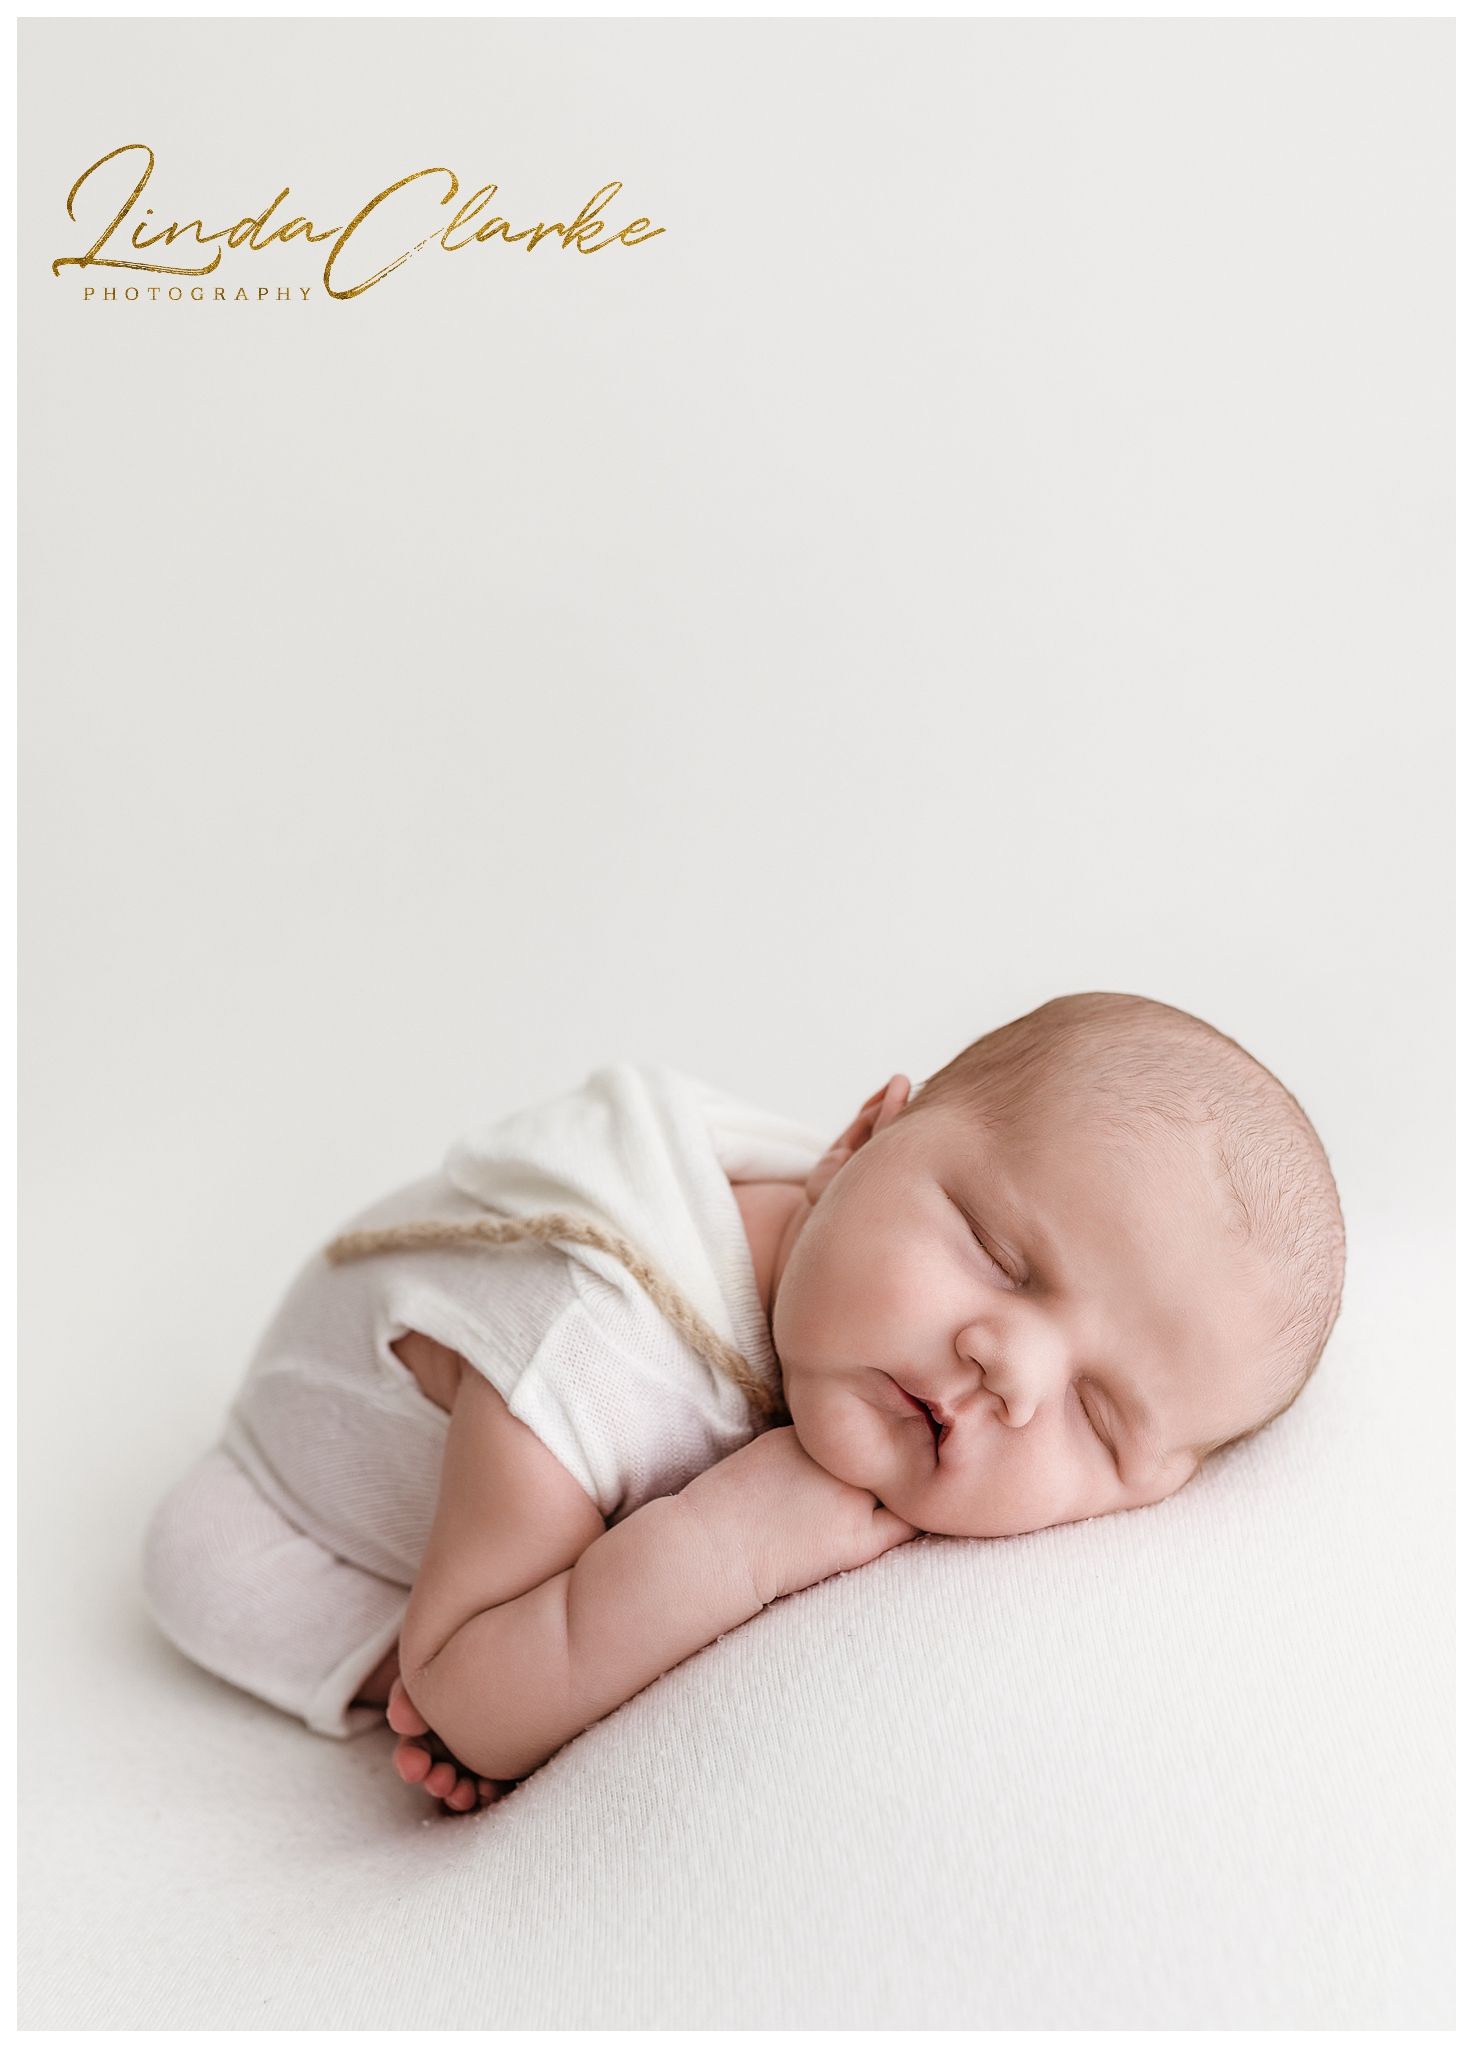 Newborn baby during a newborn photoshoot in dublin Ireland